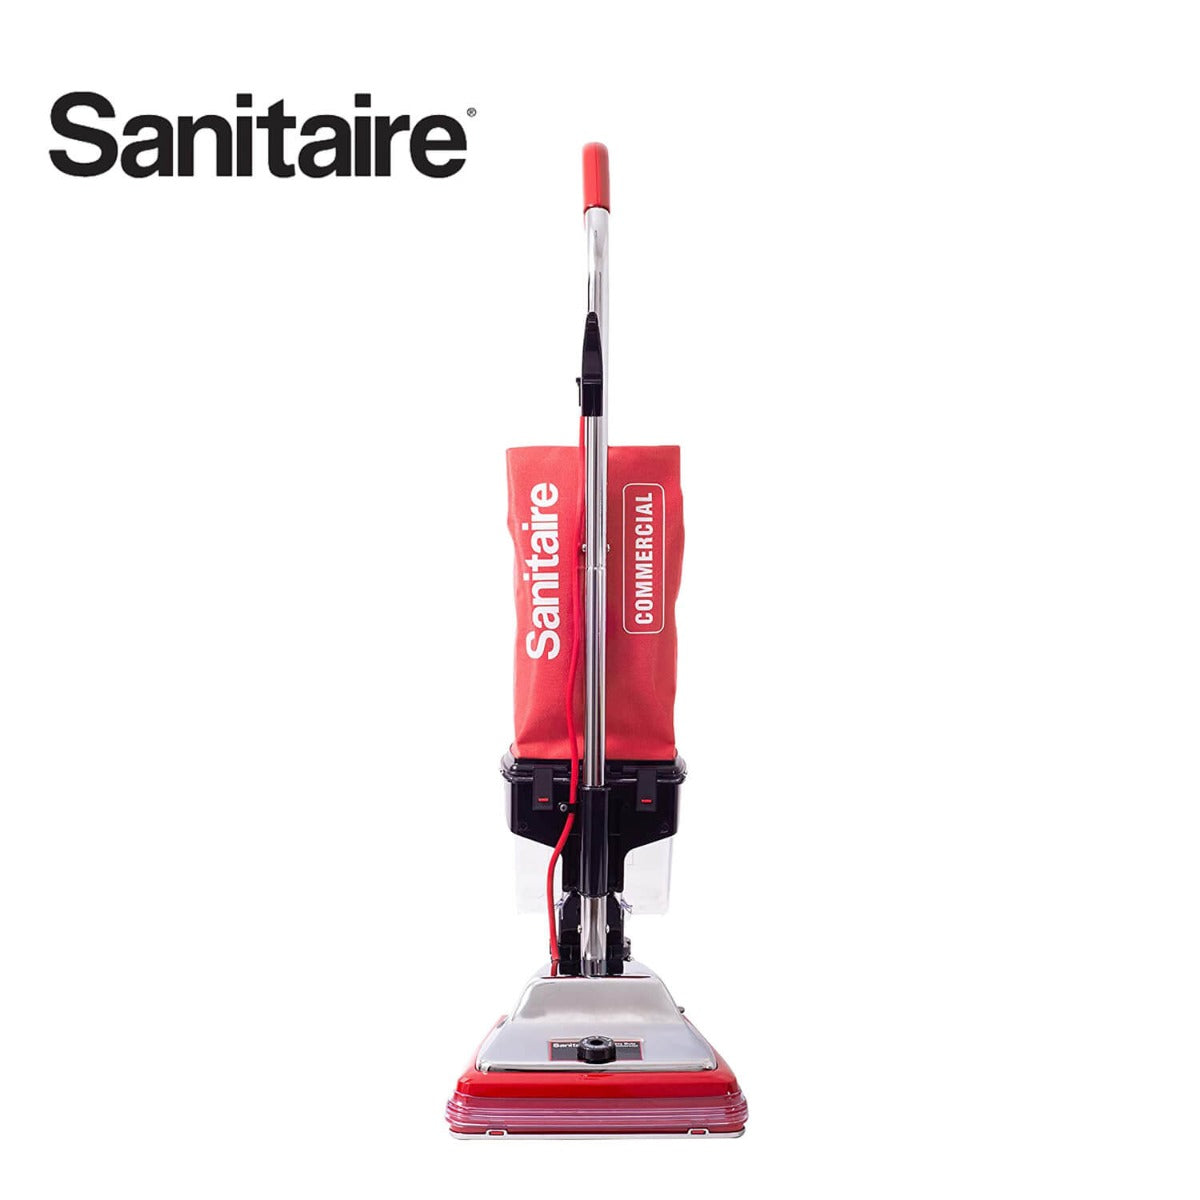 Sanitaire SC887 Commercial Upright Vacuum